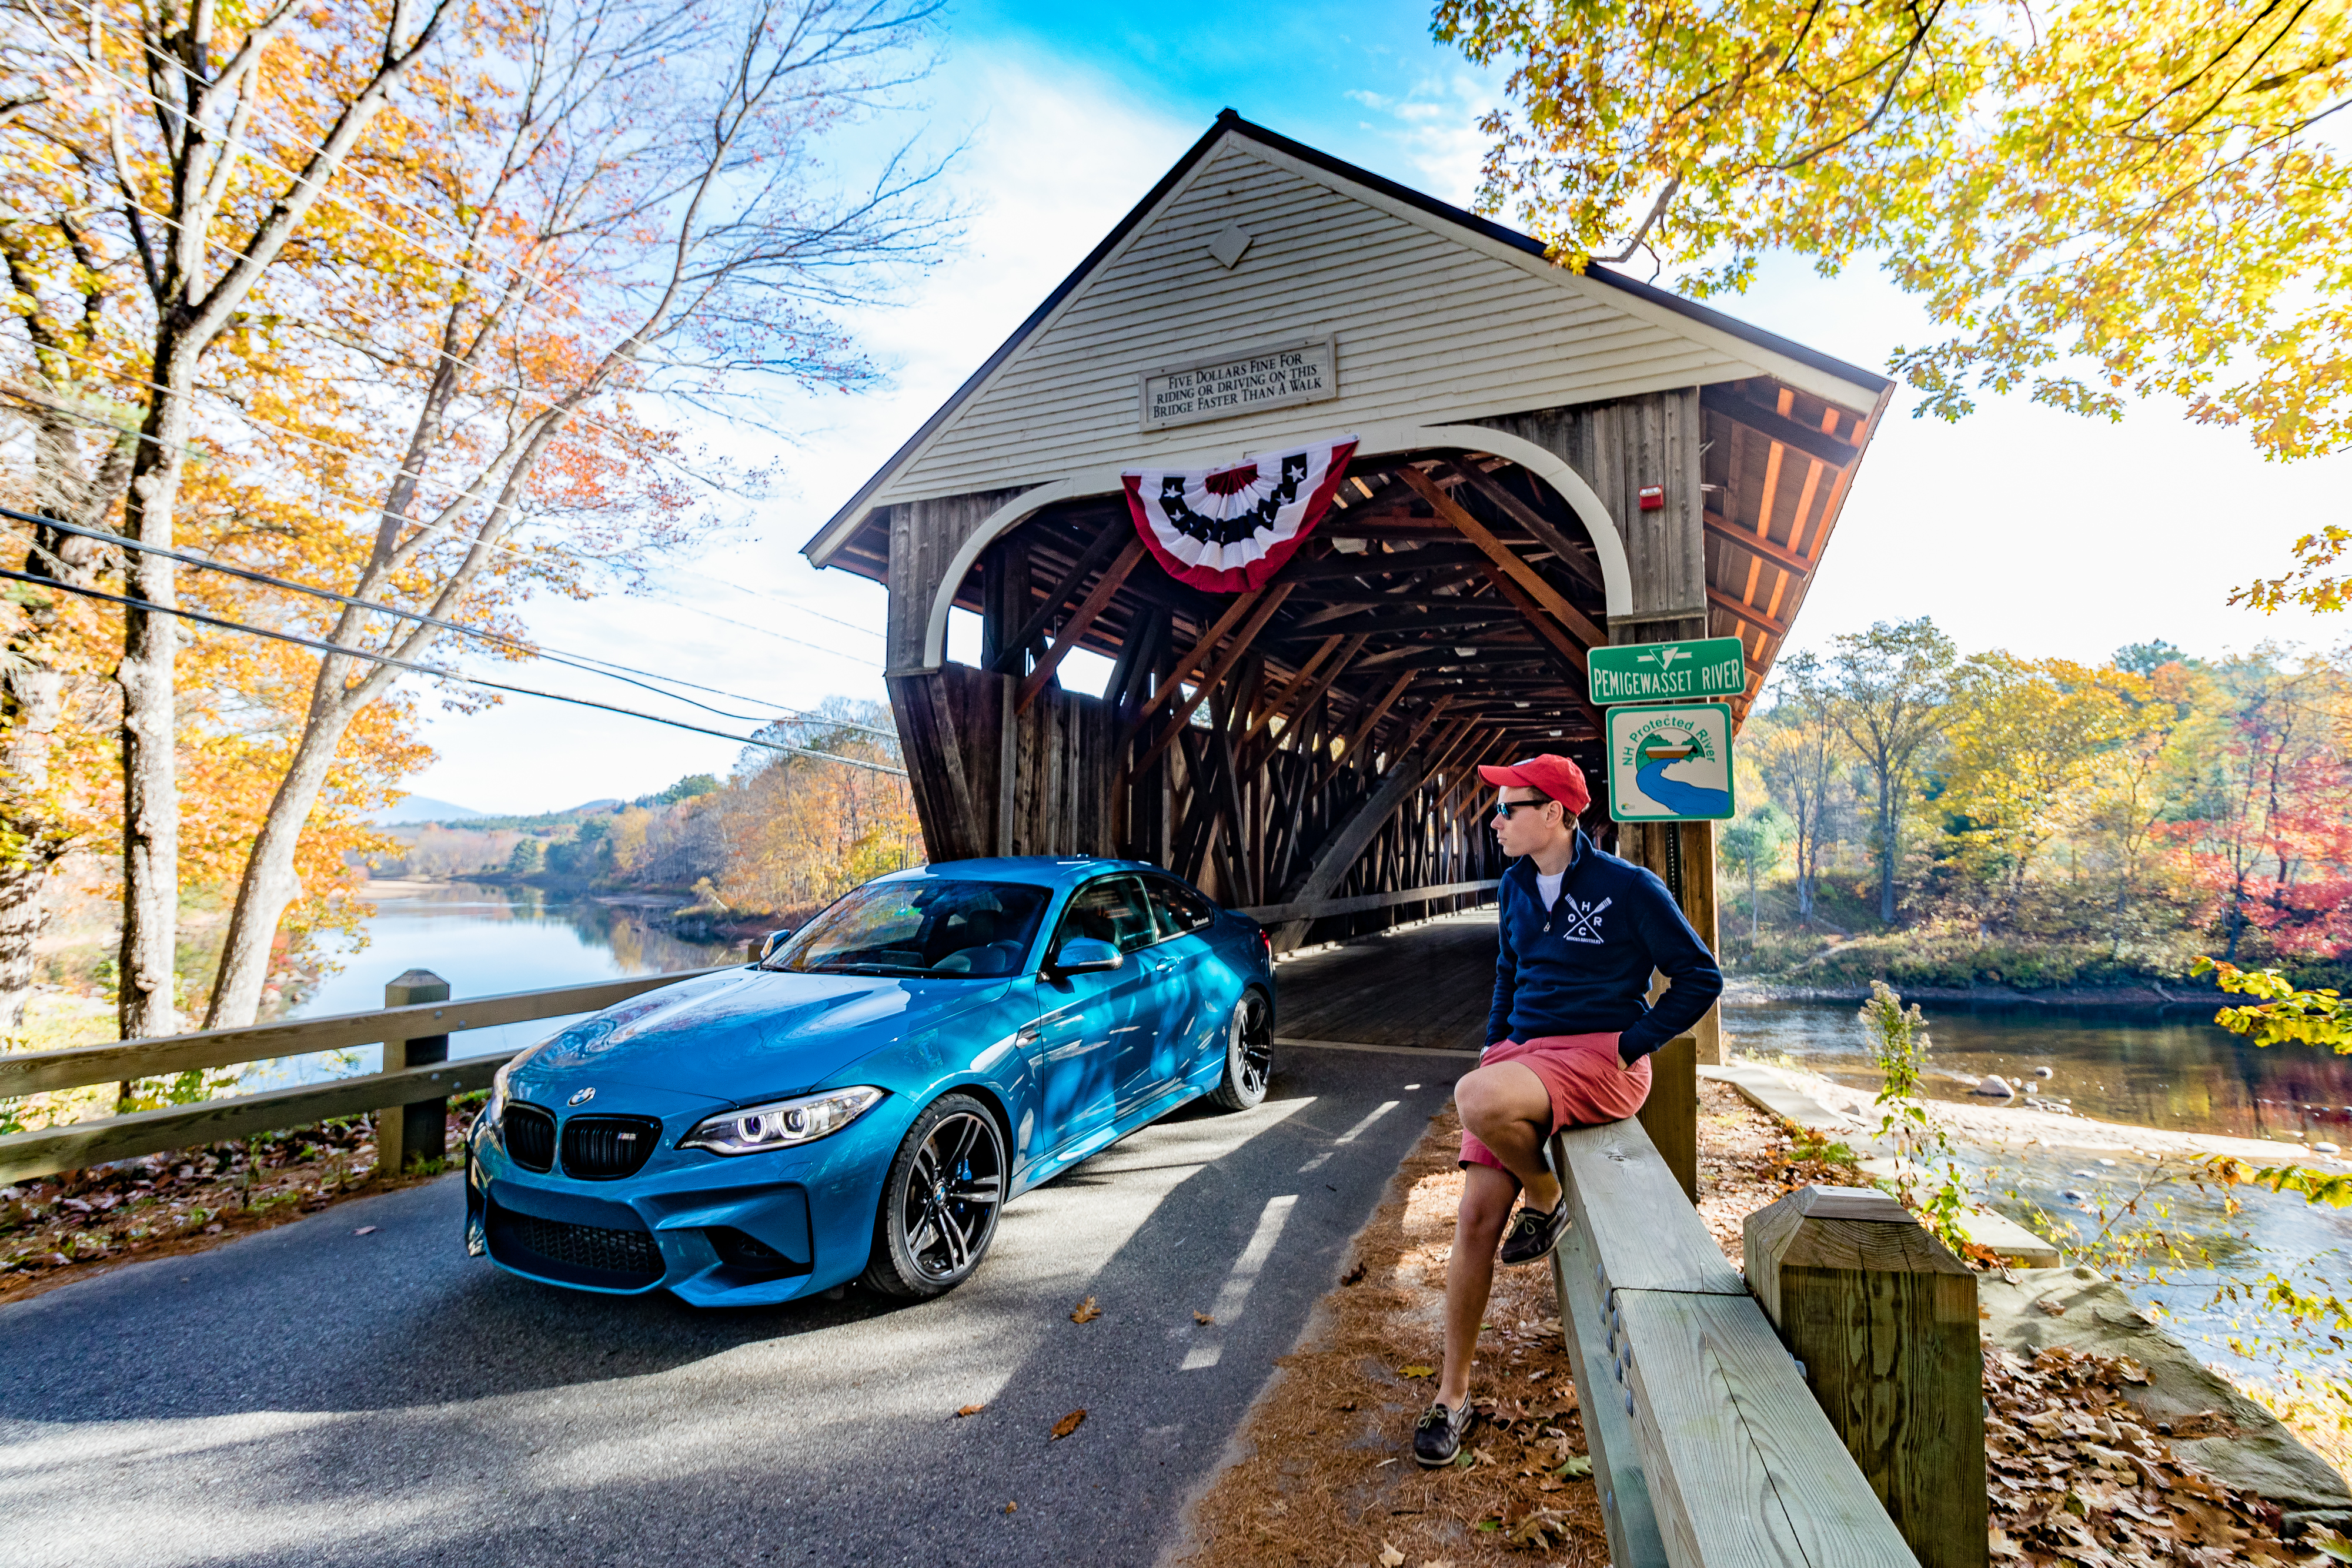 The New Hampshire Covered Bridge Tour